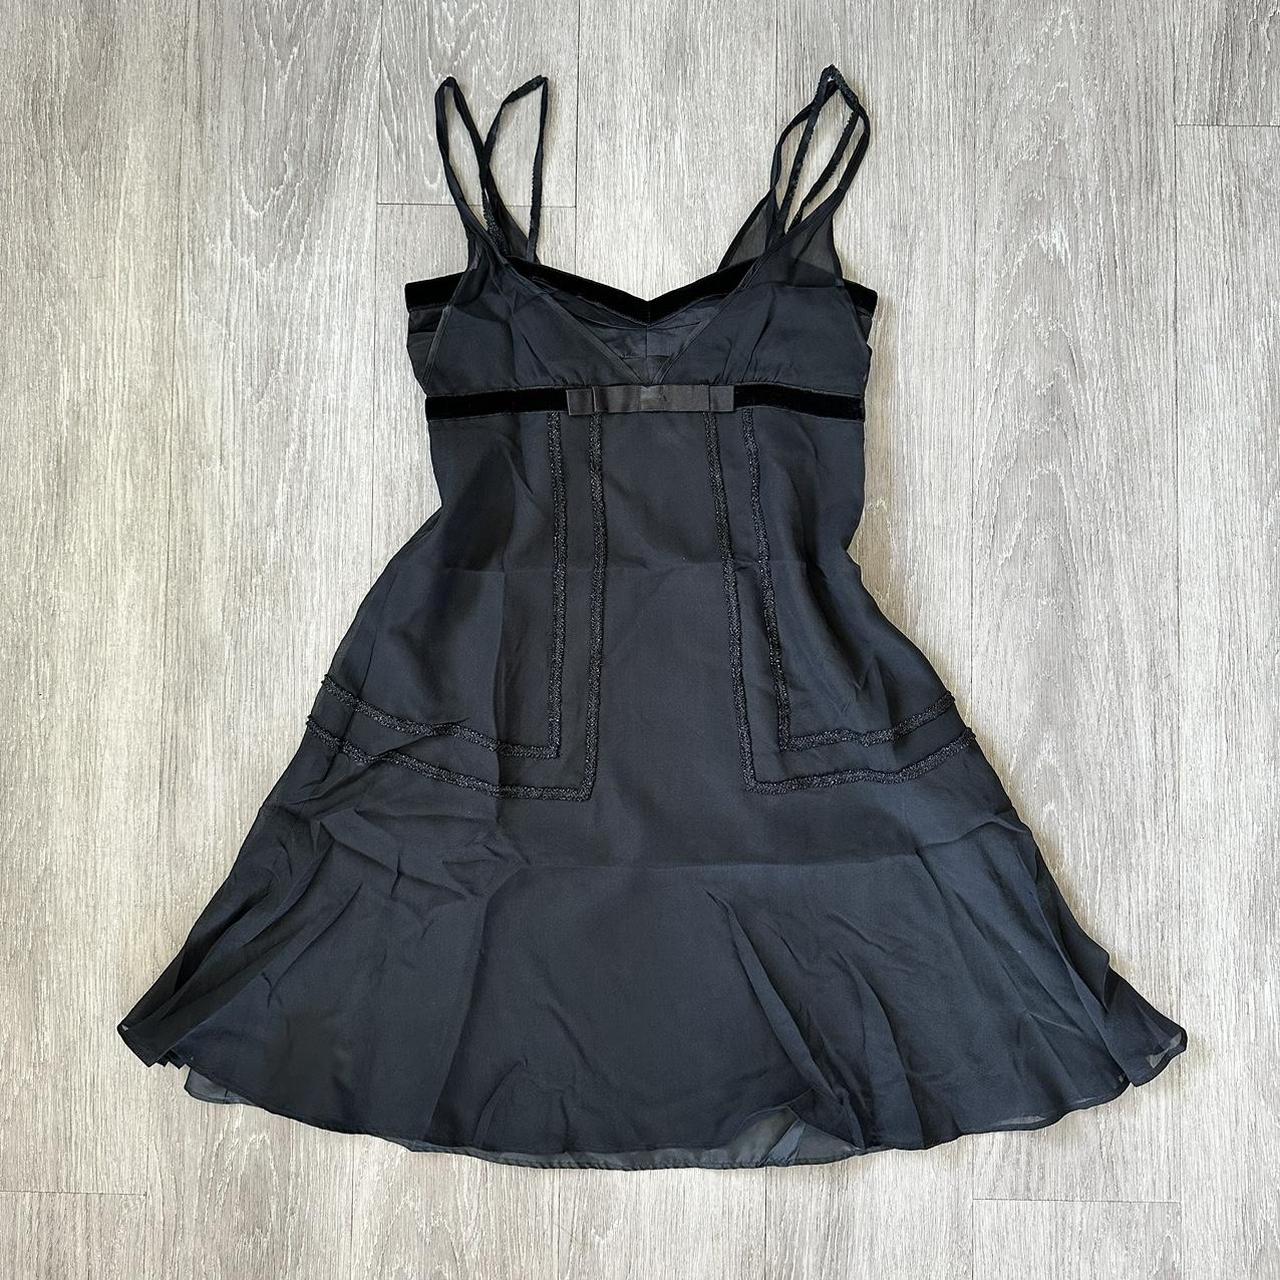 Jill Stuart Women's Black Dress | Depop